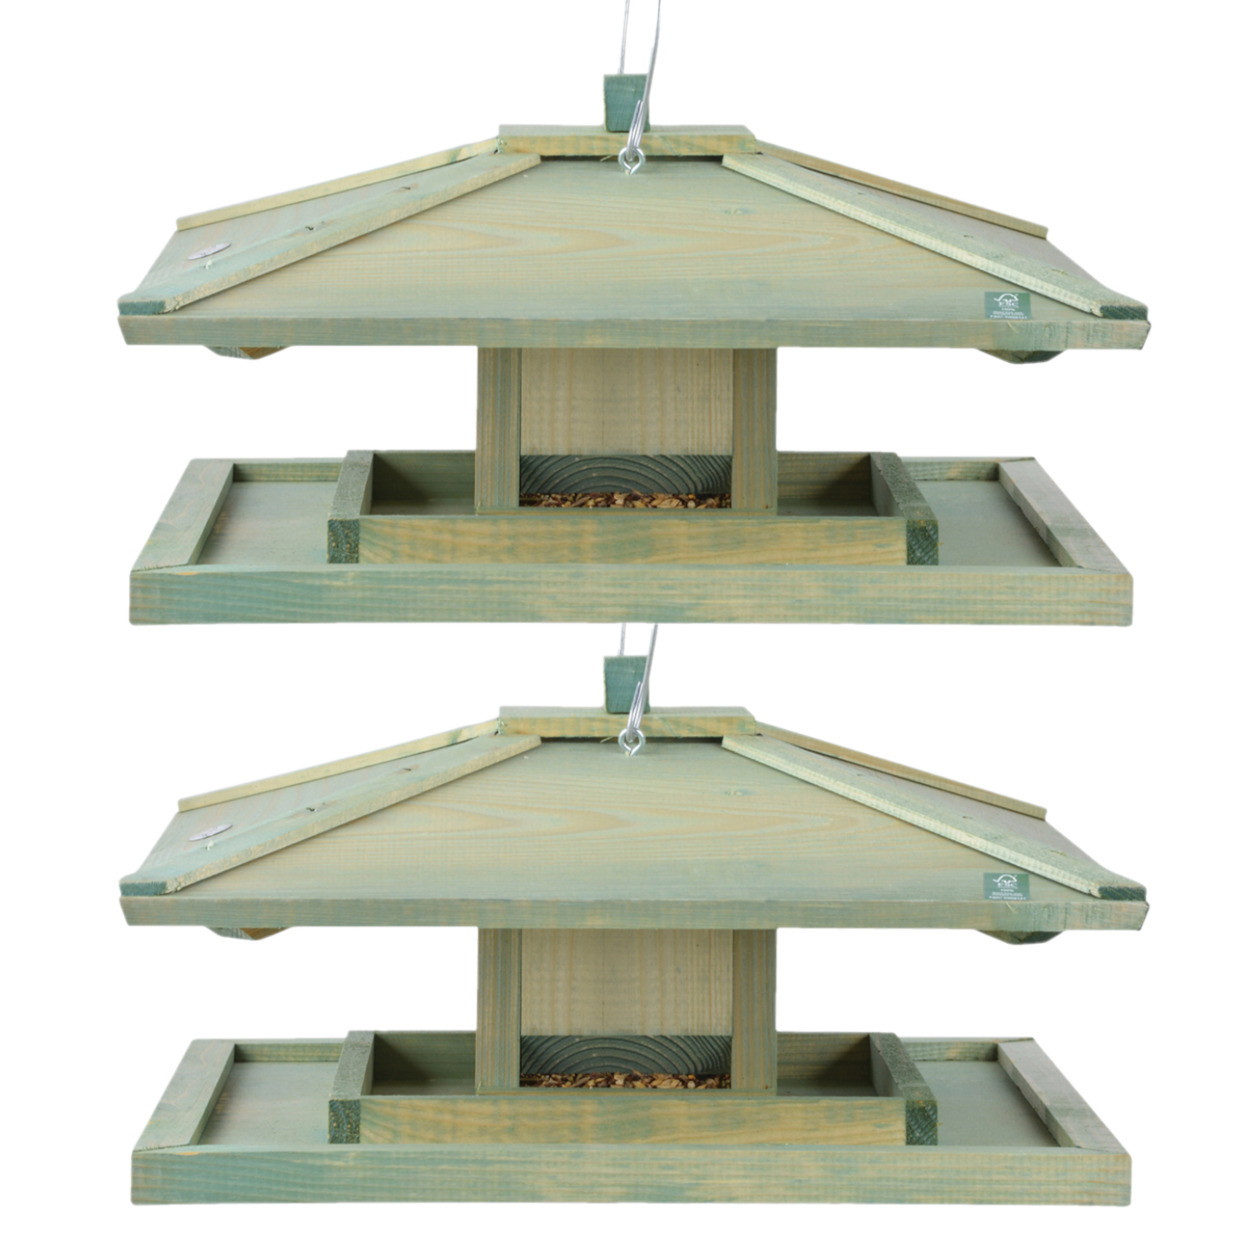 2x stuks japans vogelhuisje-voedersilo hout 38 cm